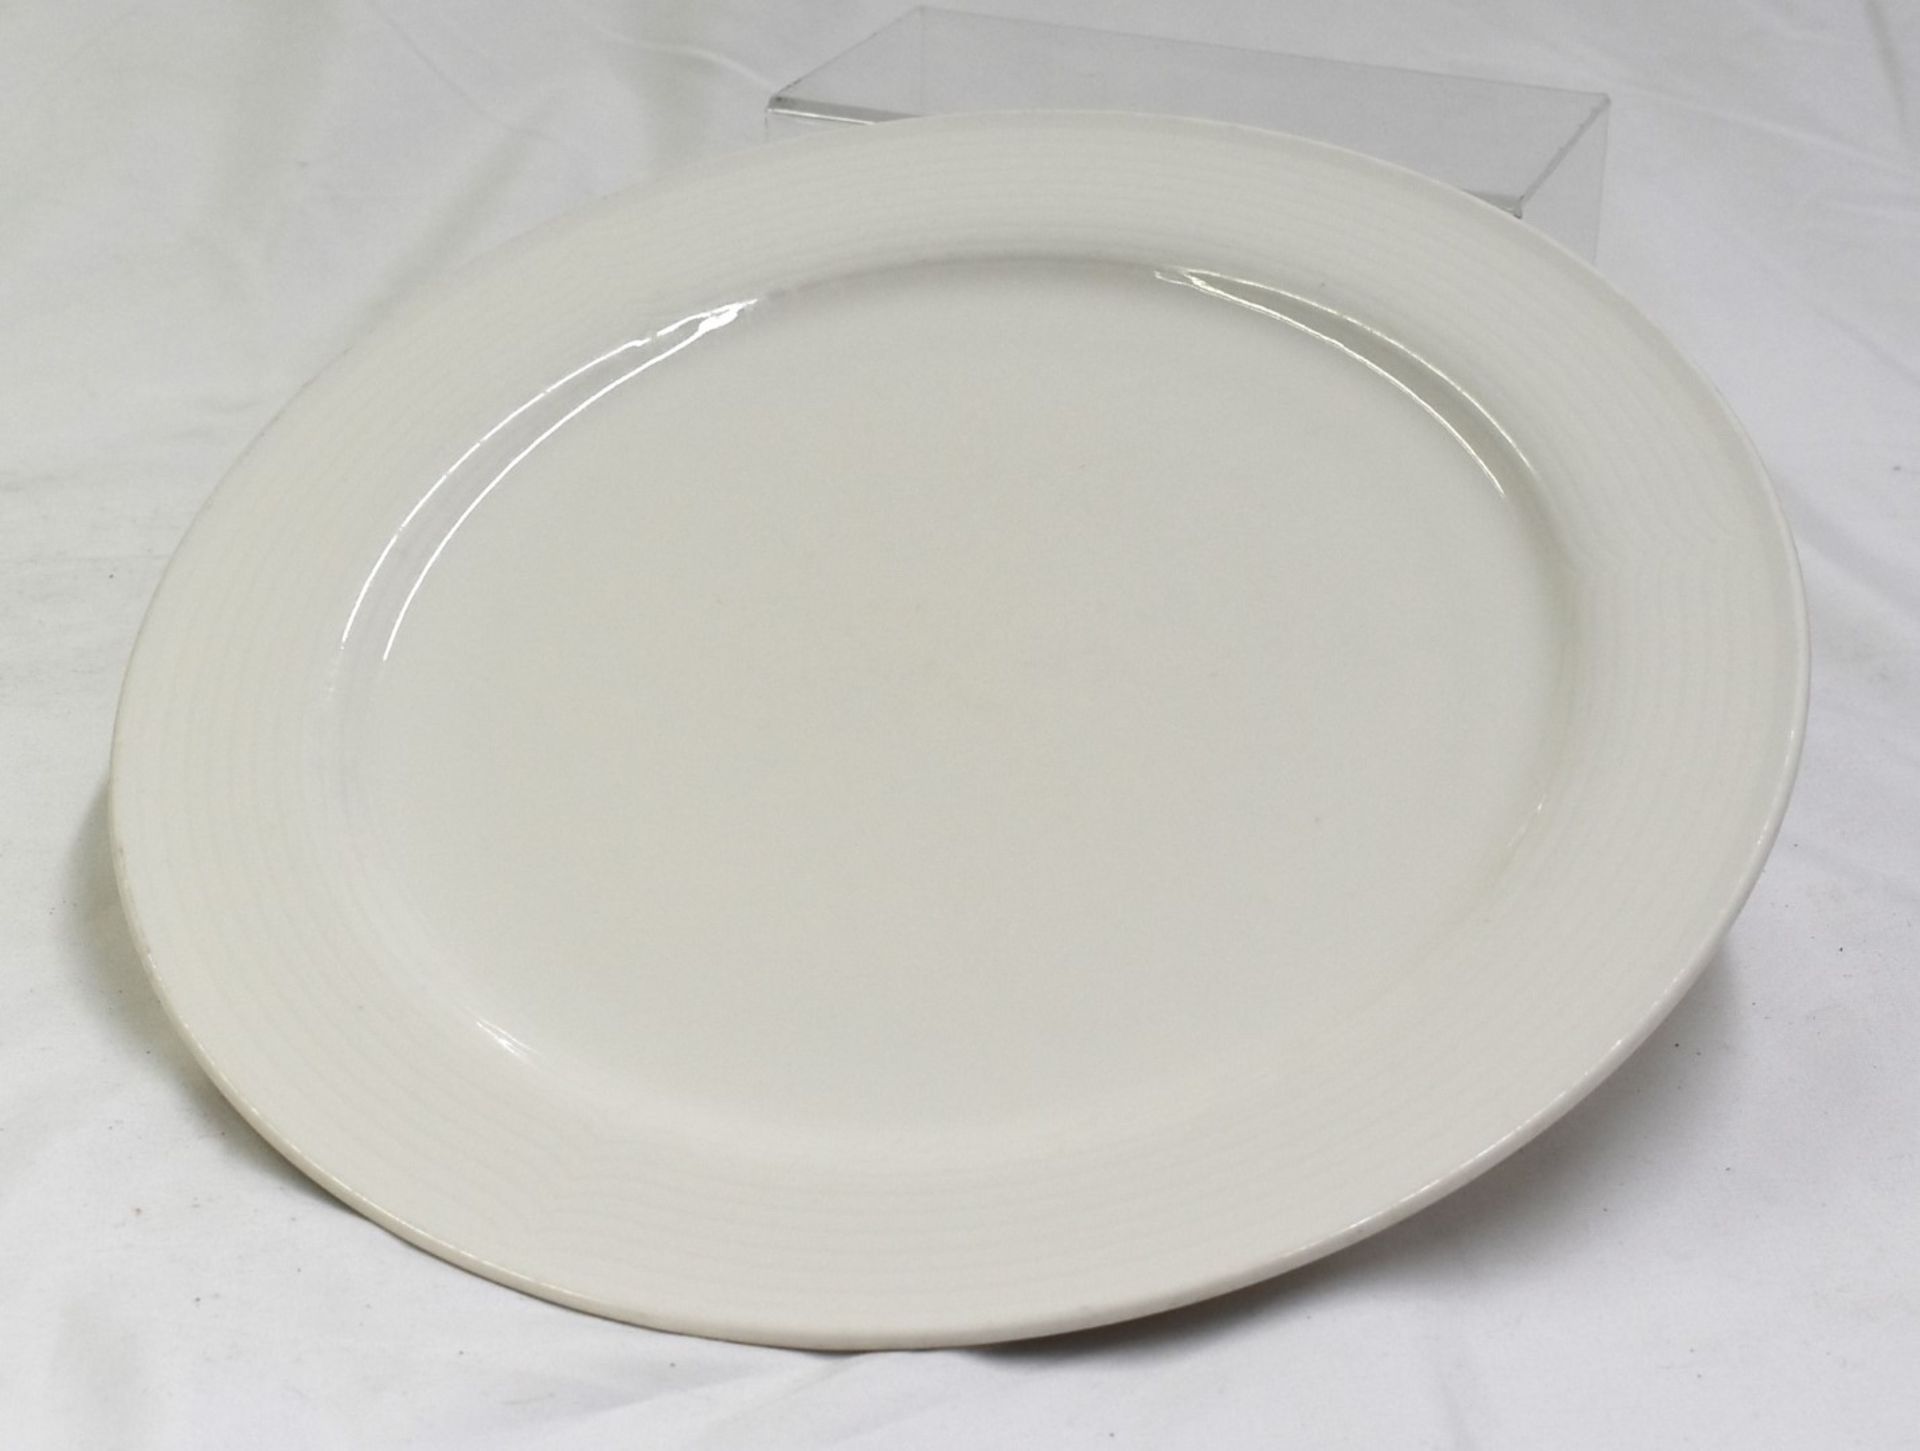 6 x Villeroy & Boch Contemporary Porcelain Flat Dinner Plates - 31.5 cms - CL011 - Ref: PX284 - - Image 6 of 7